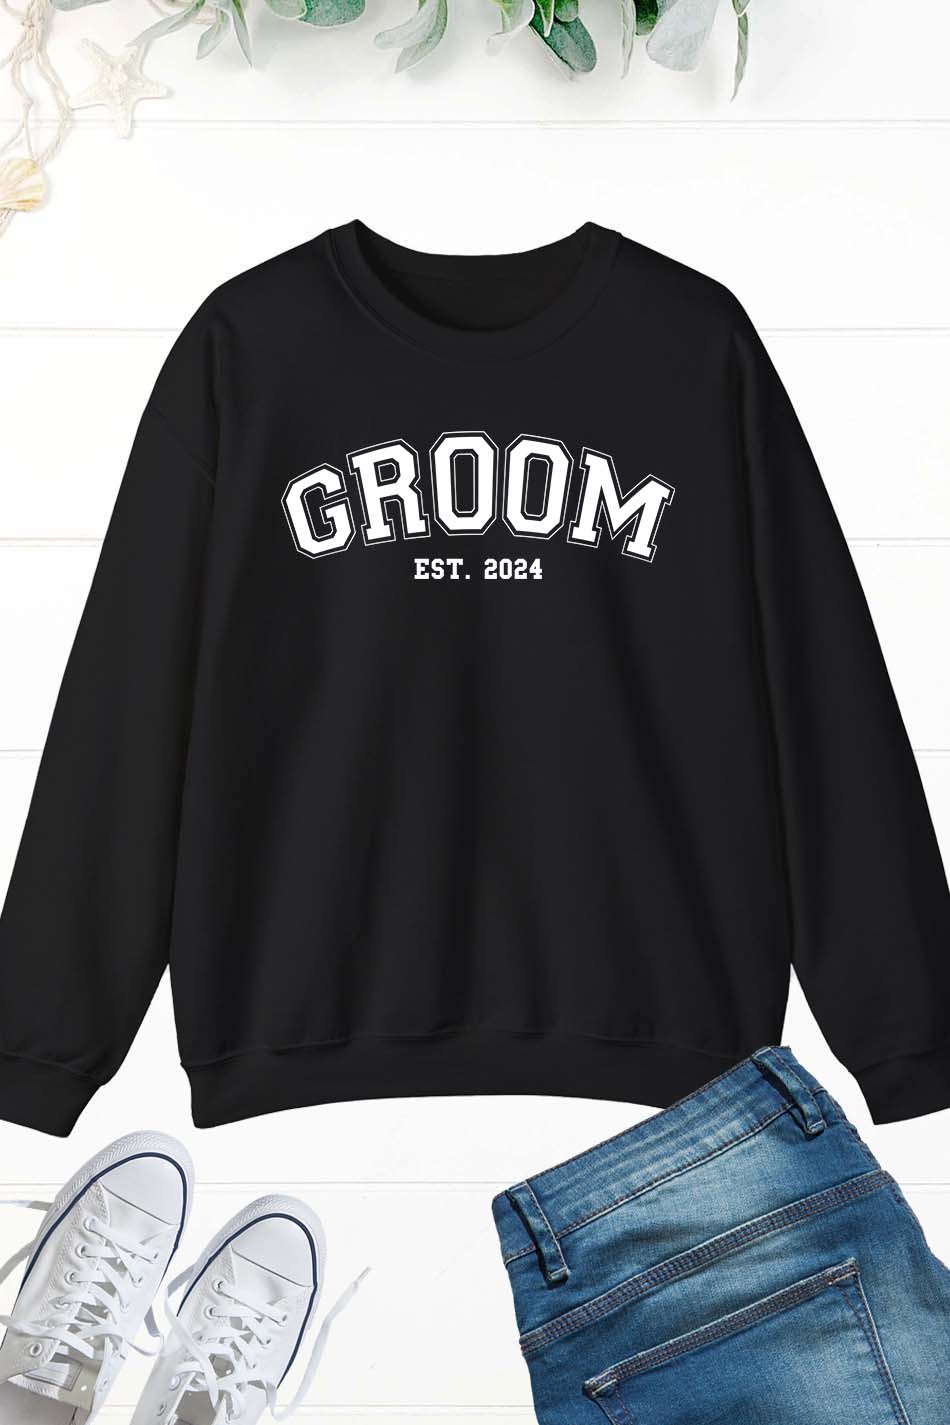 Bride and Groom Est 2024 Sweatshirt Custom Year